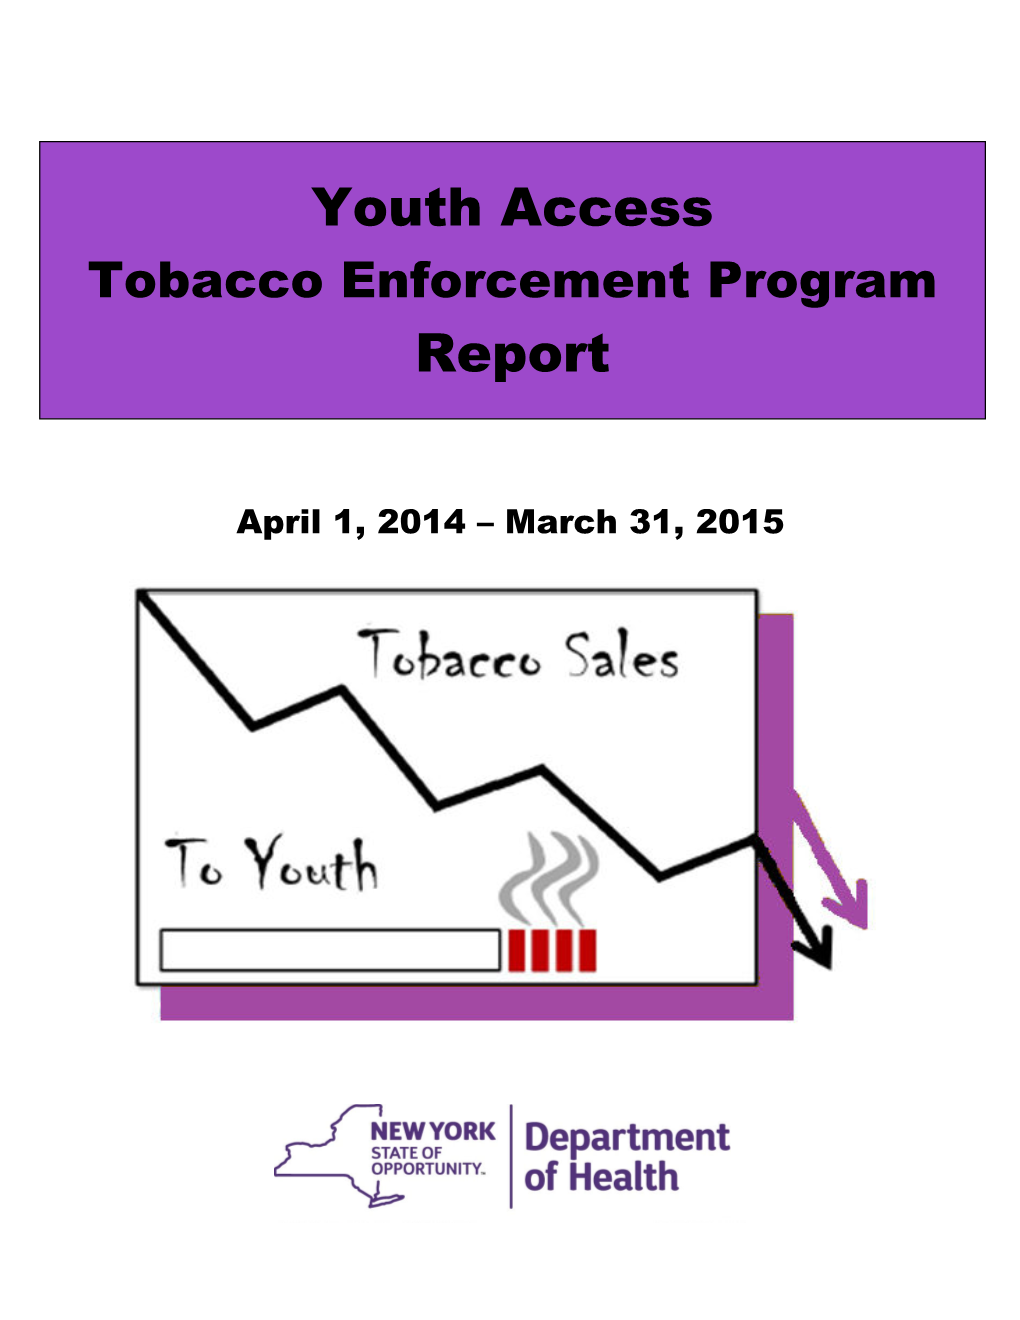 Youth Access Tobacco Enforcement Program Report, April 1, 2014